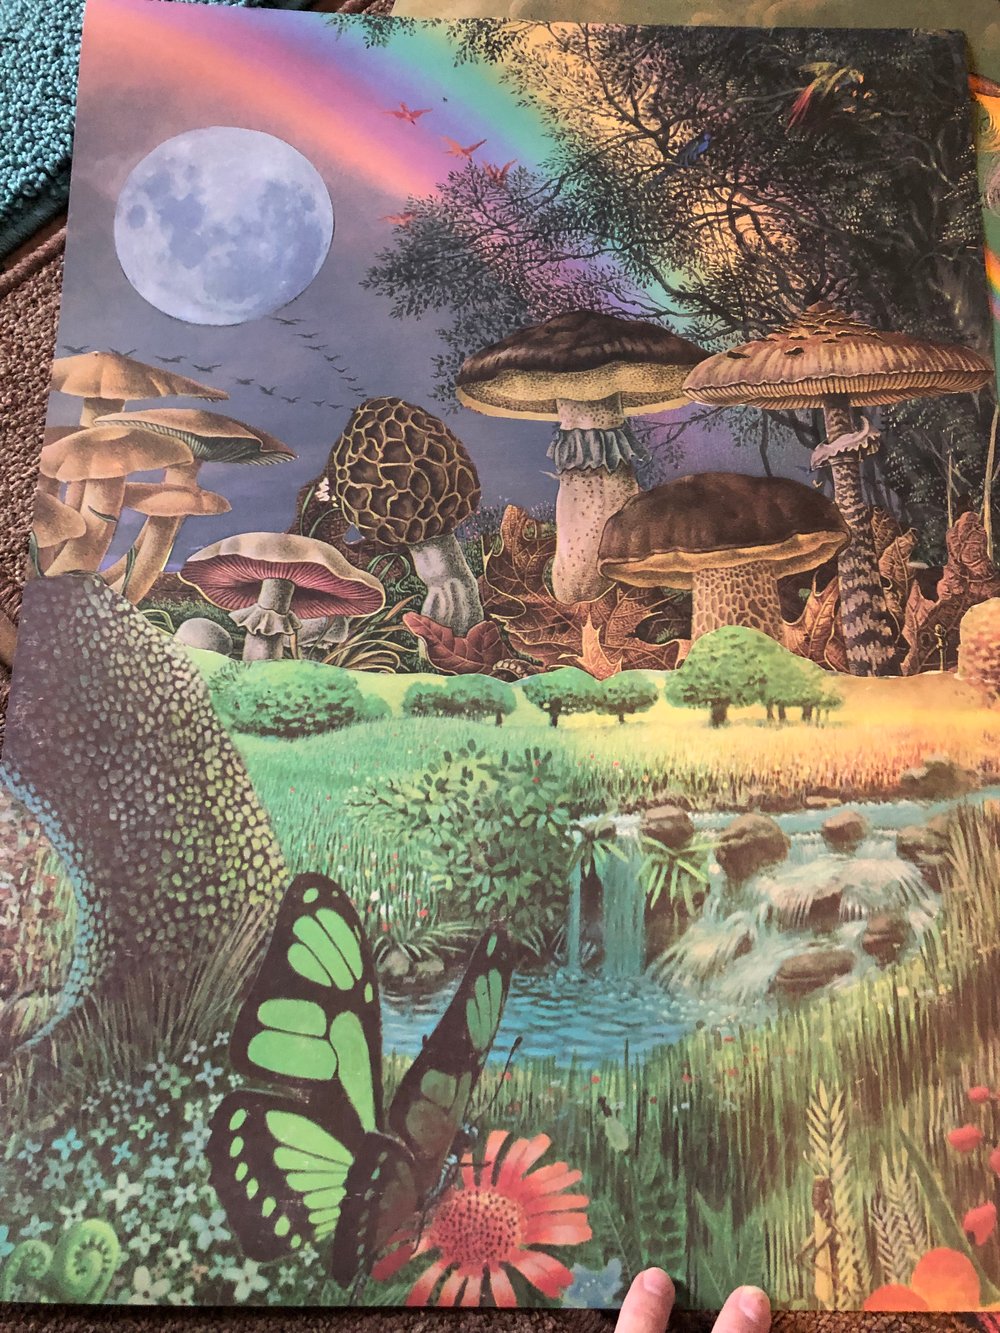 Mushroom paradise poster 